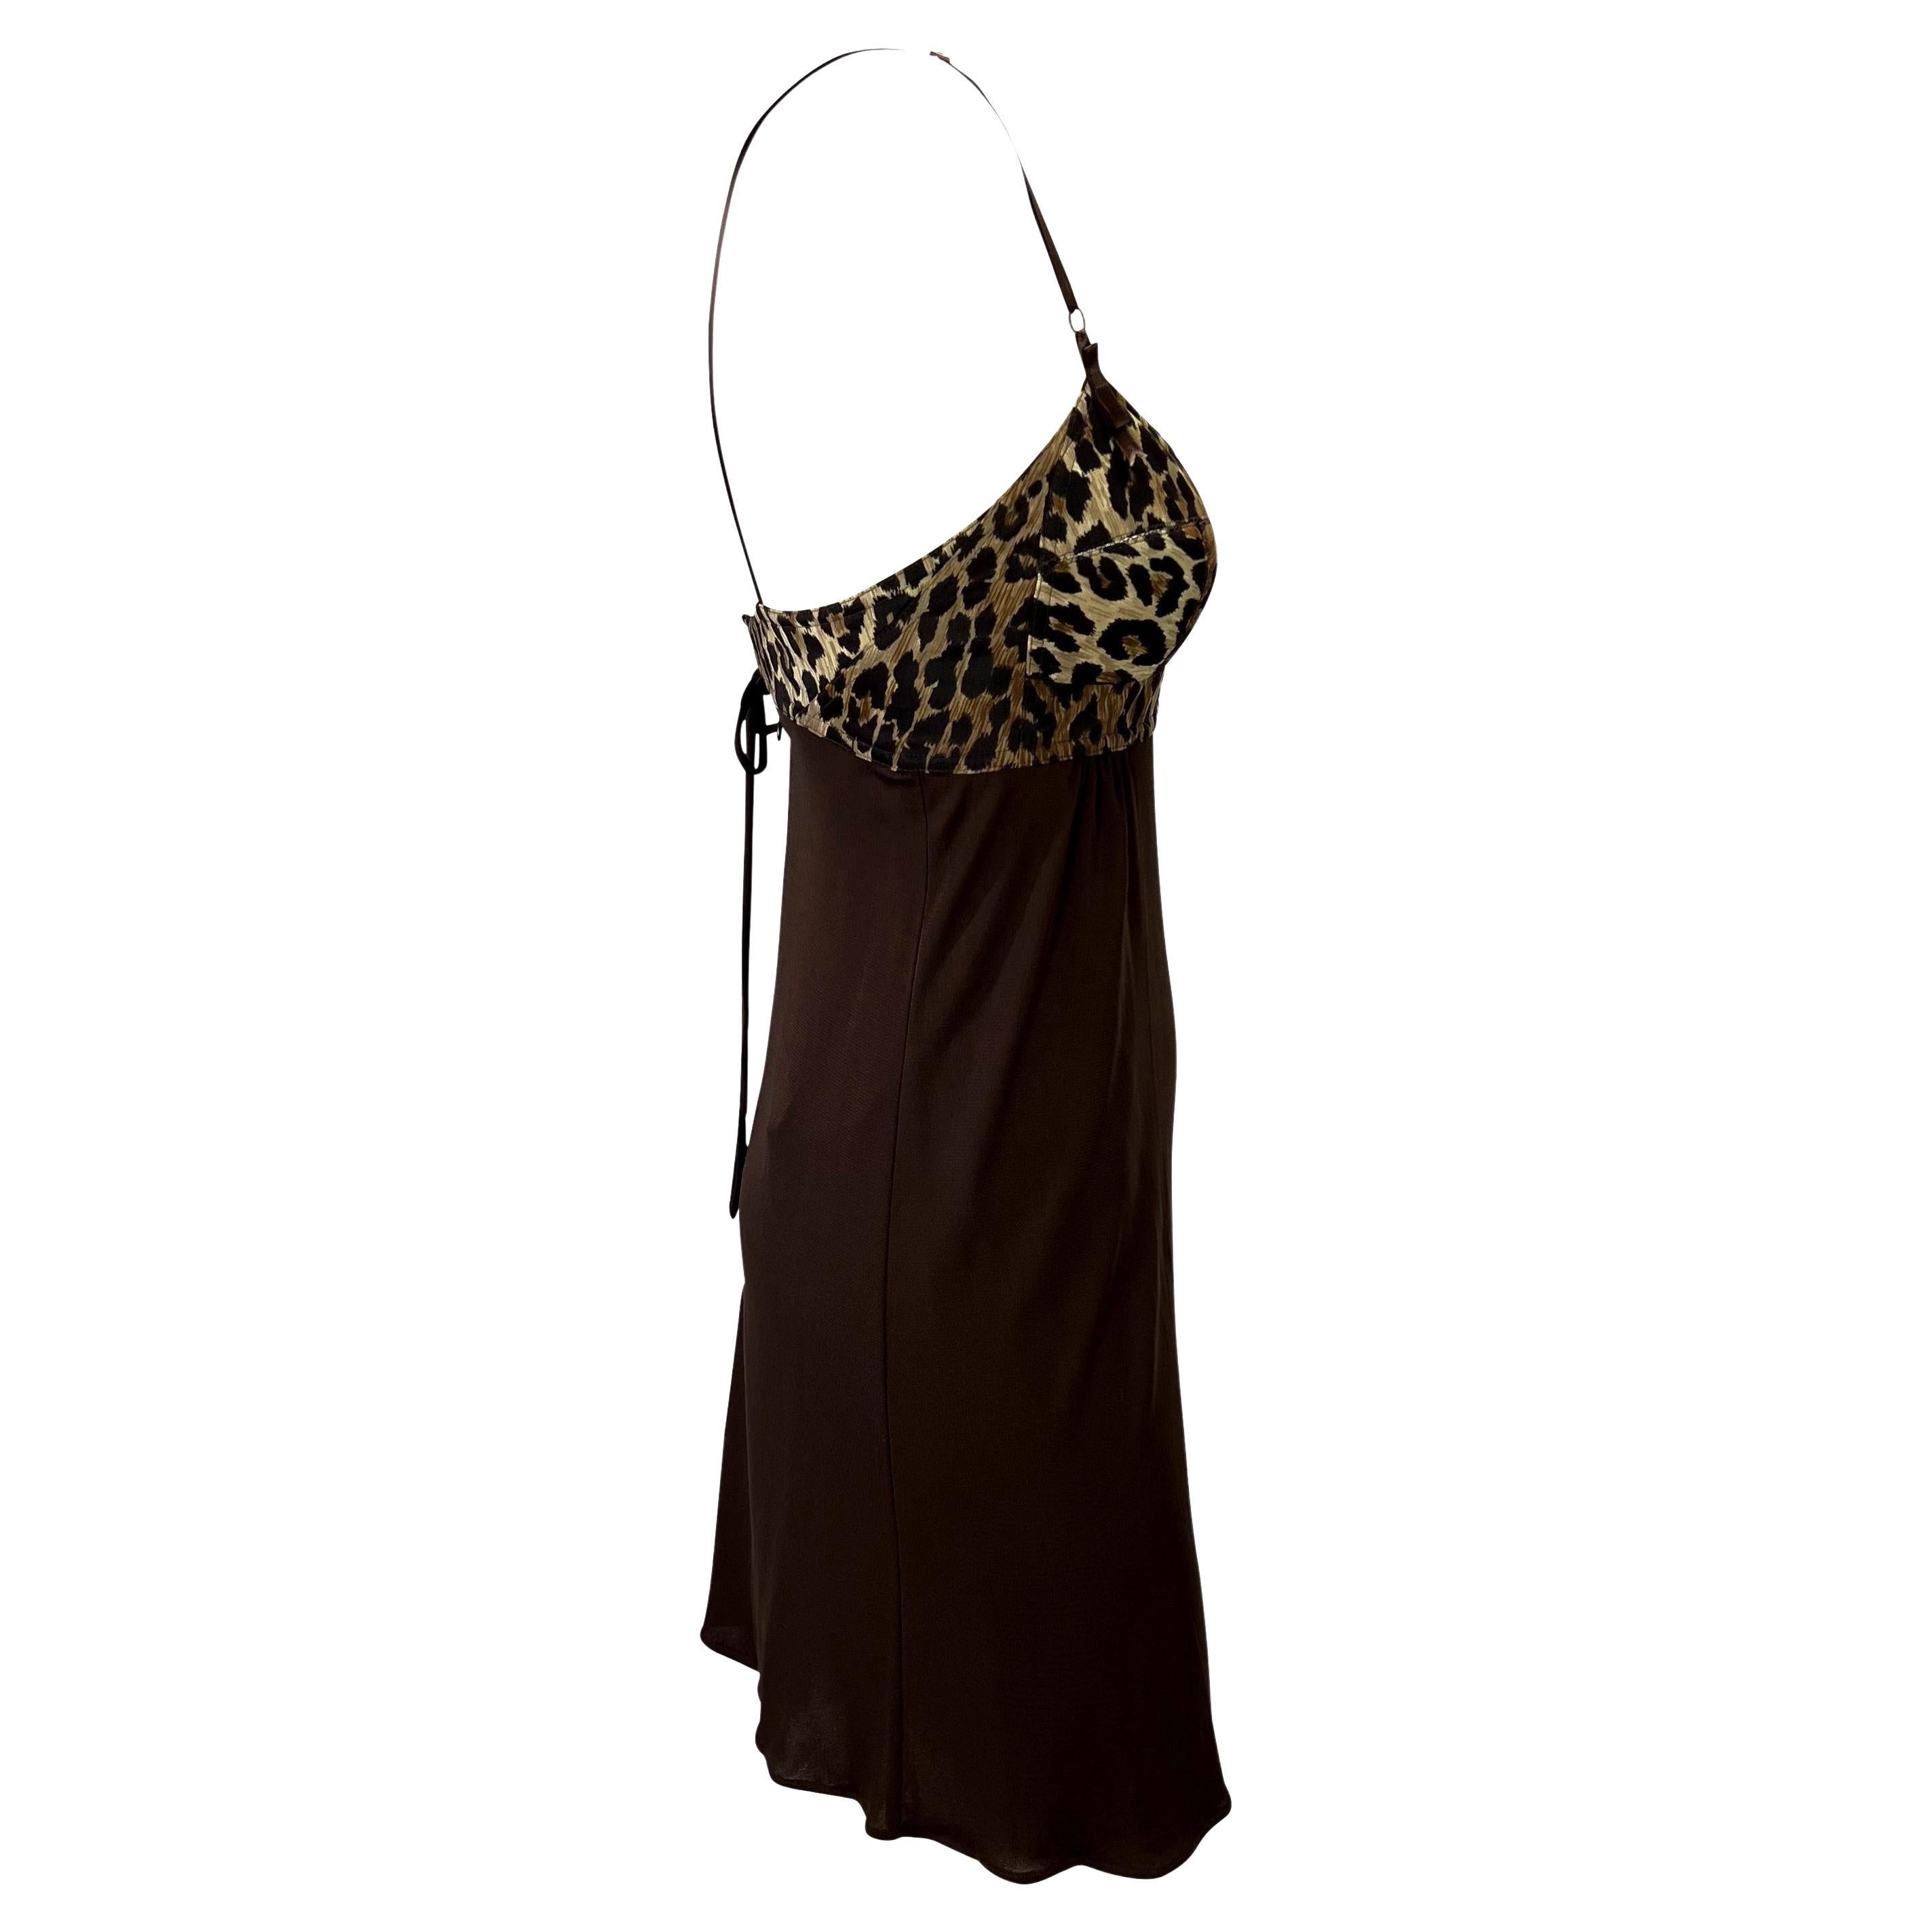 S/S 1997 Dolce & Gabbana SJP Cheetah Print Sheer Brown Bustier Slip Dress For Sale 1